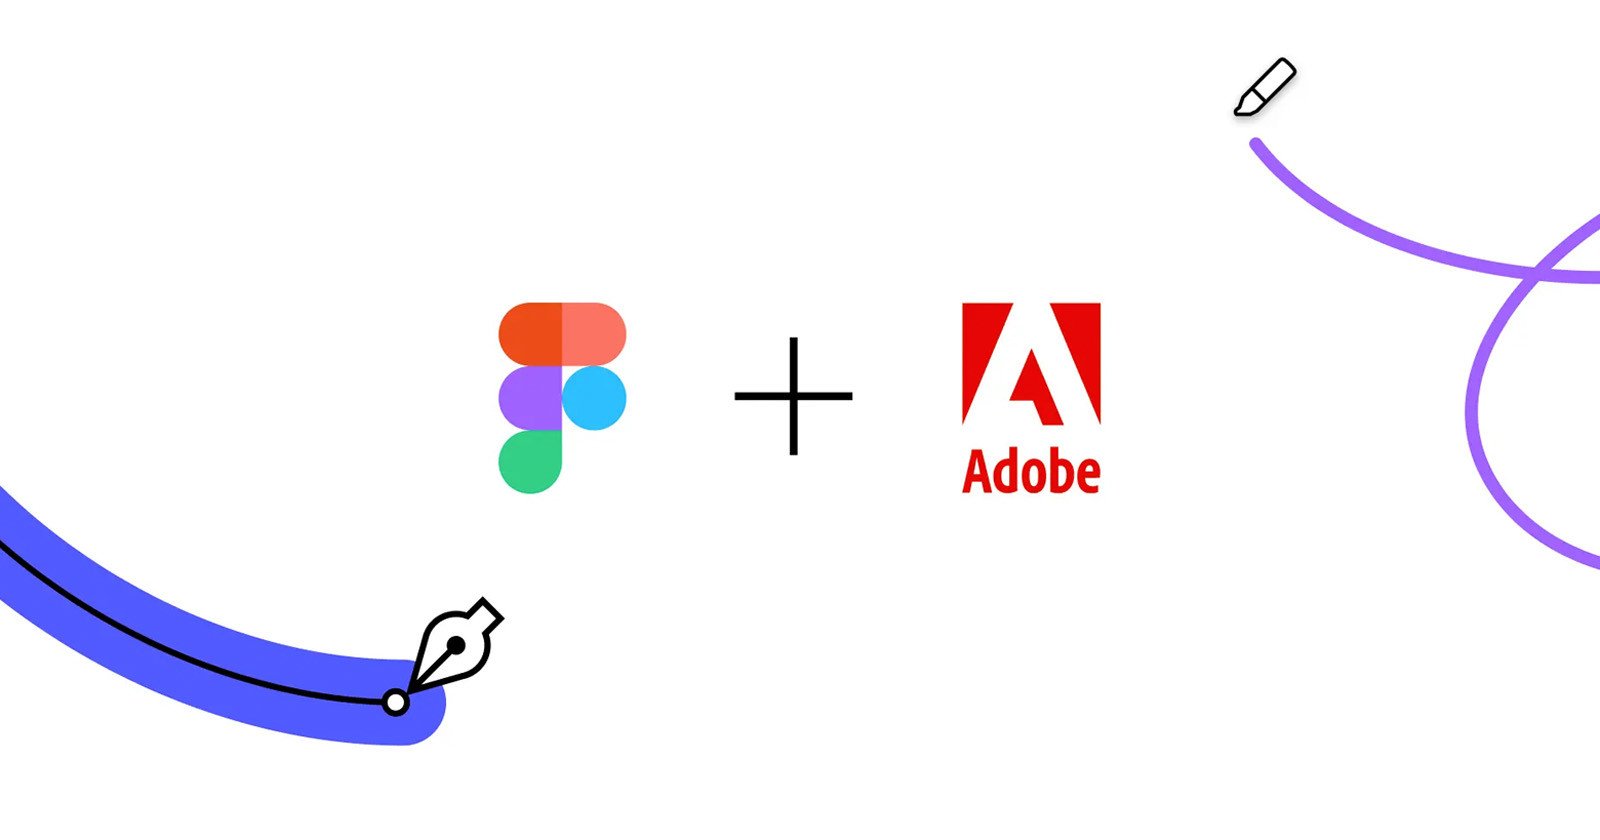 Adobe Buys Design Platform Figma for $20 Billion